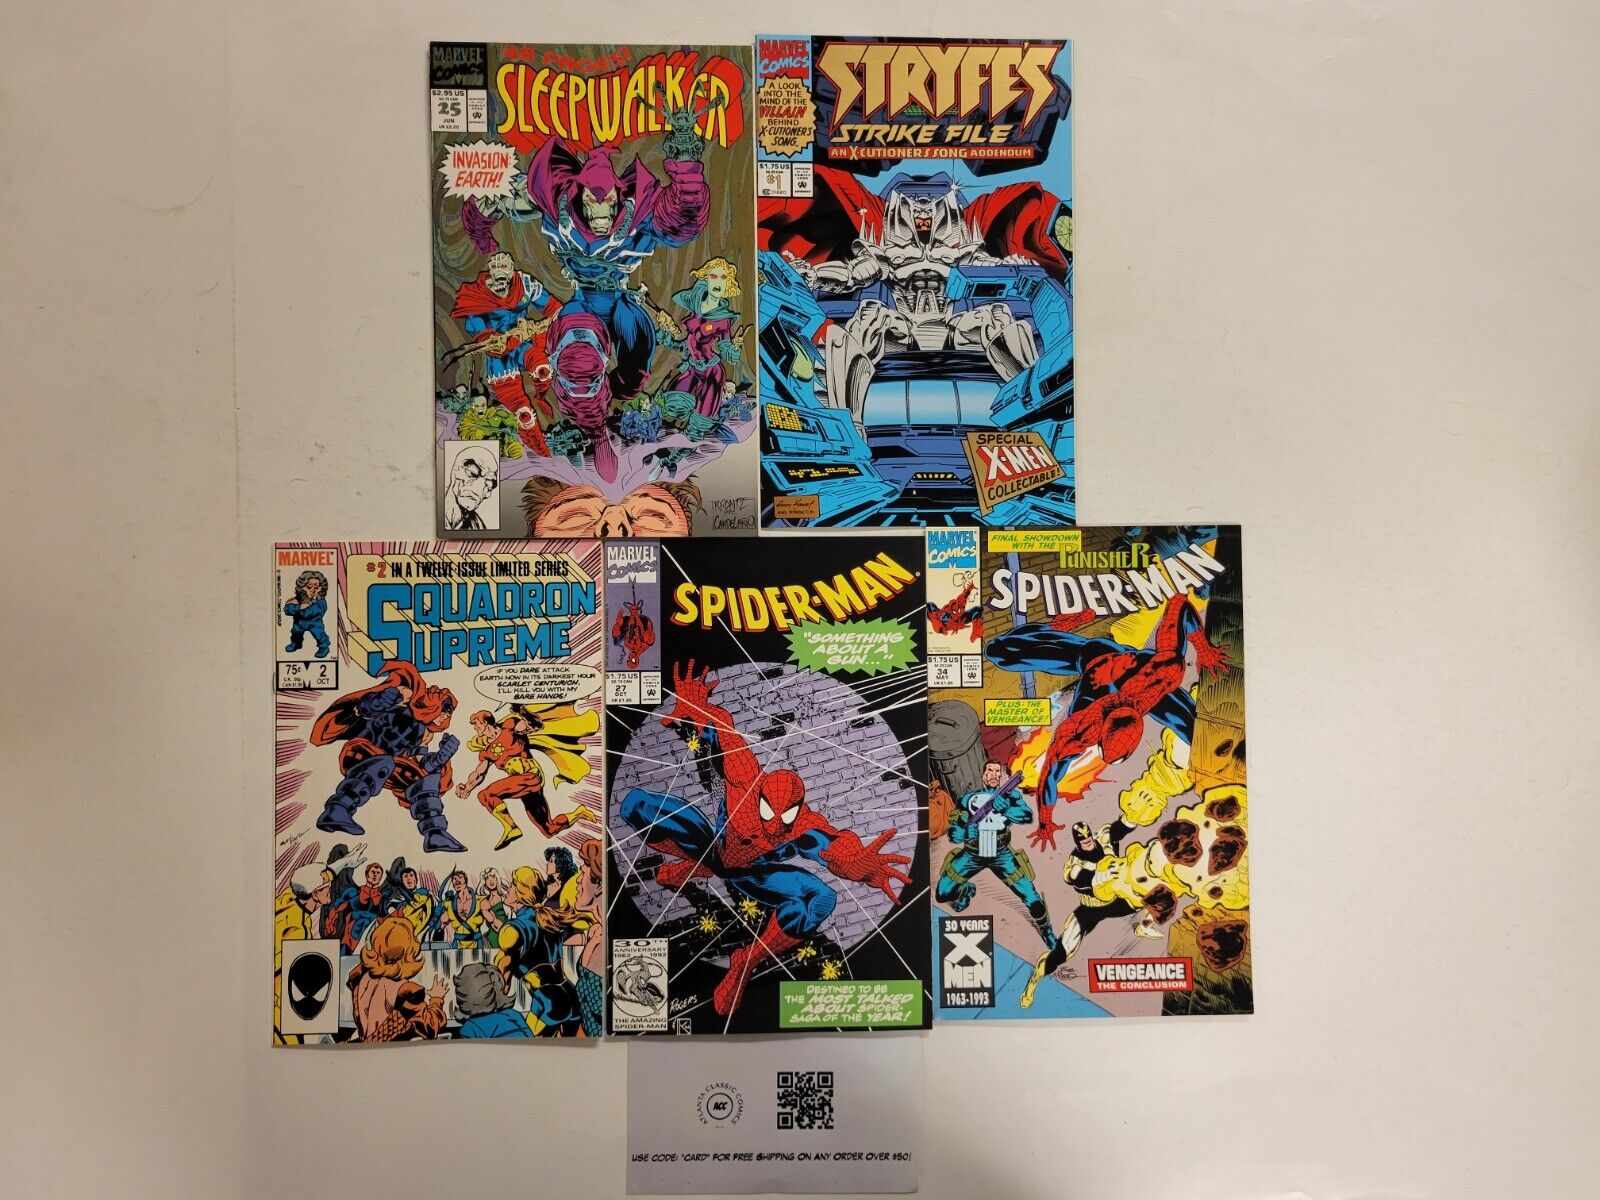 5 Comics #25 Sleepwalker #1 Stryfe #27 34 Spider-Man #2 Squadron Supreme 56 TJ32